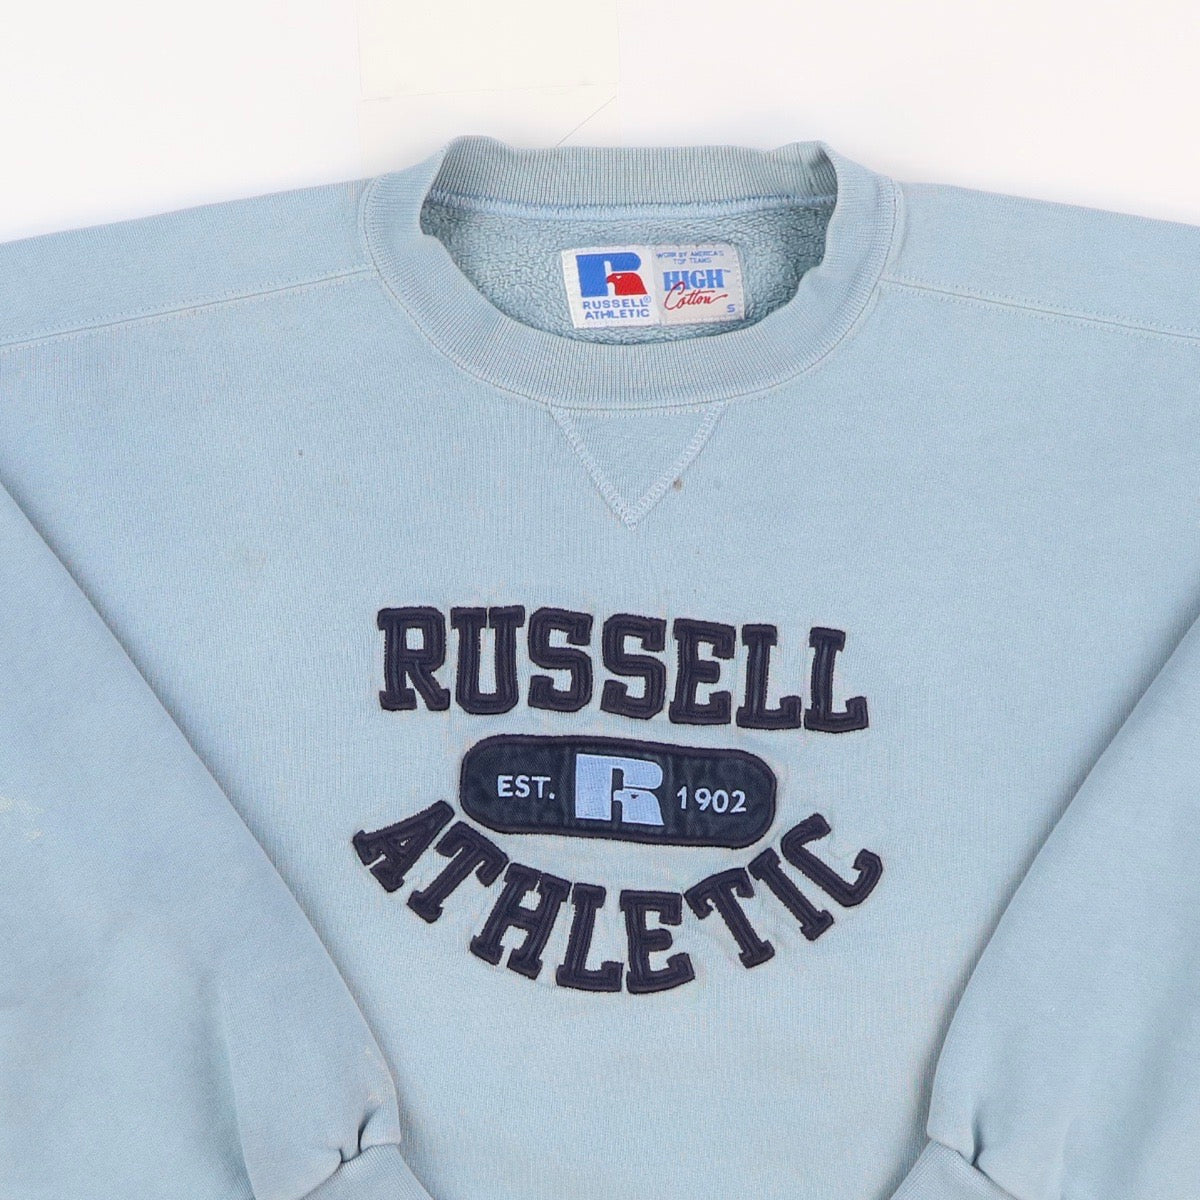 Russell Athletic Sweatshirt (S)